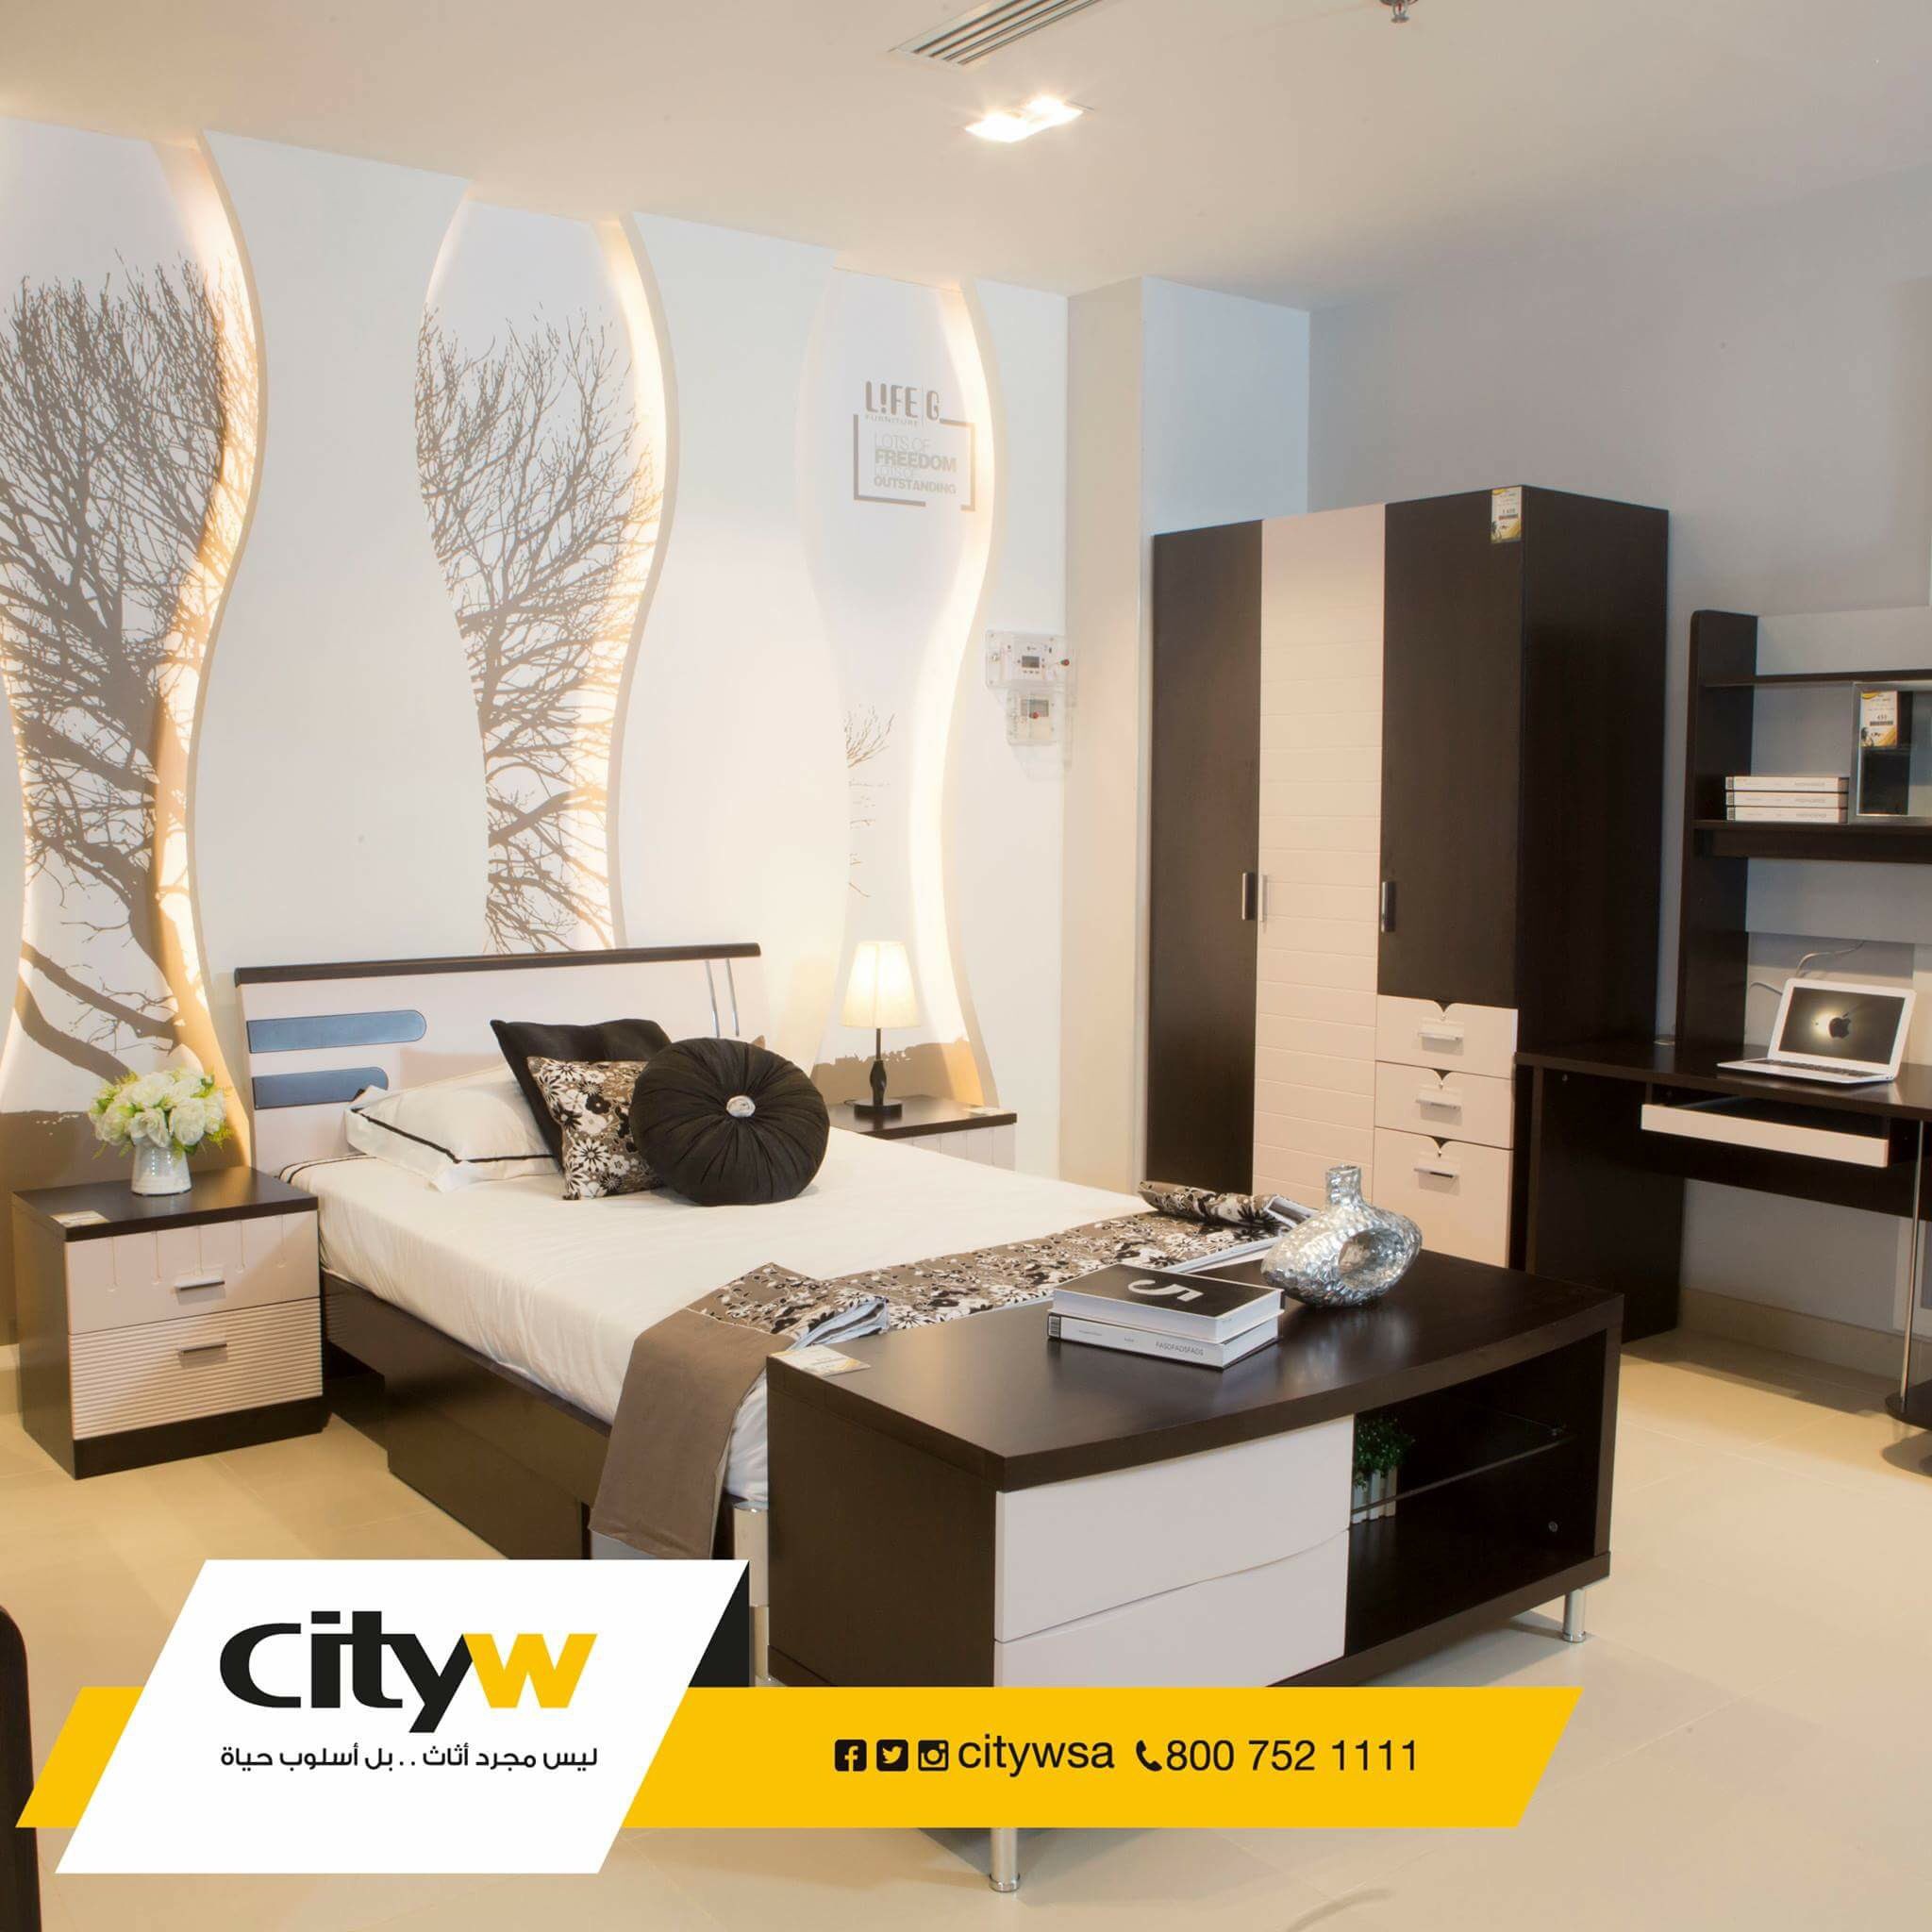 Cityw سيتي دبليو على تويتر غرف نوم مفردة رائعه و مليئة بالتفاصيل المميزة سيتي دبليو جدة الخبر الرياض Cityw